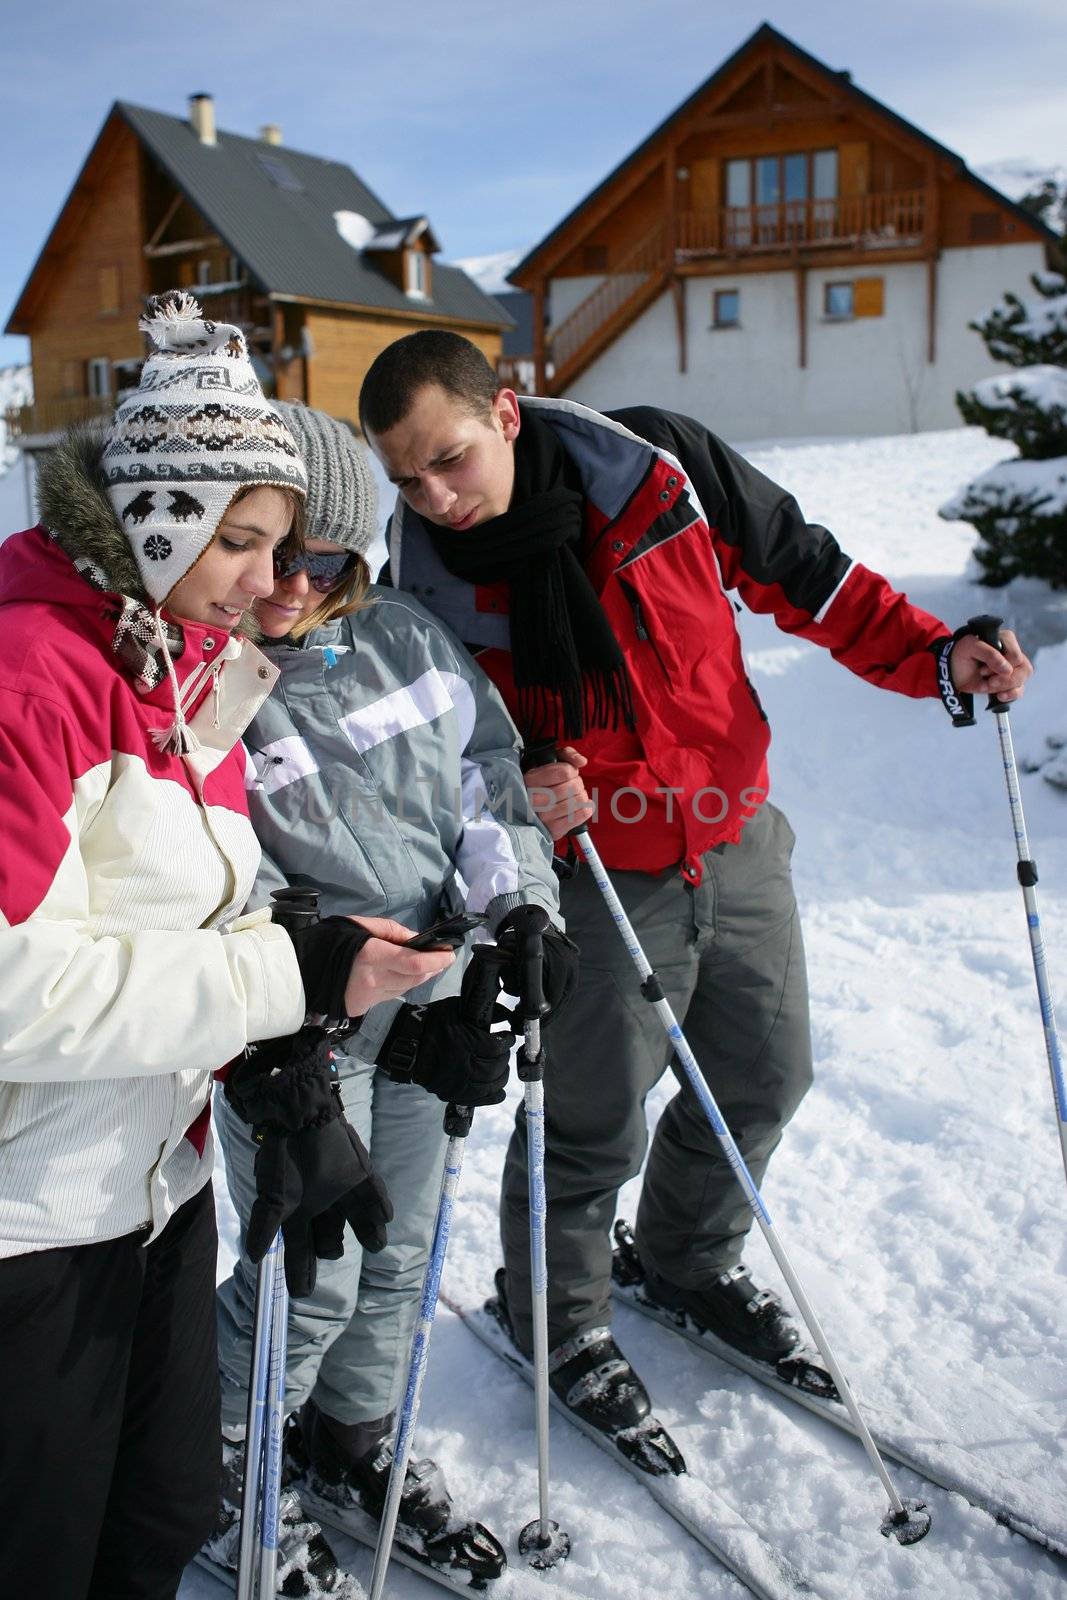 Ski teenagers looking at a phone by phovoir